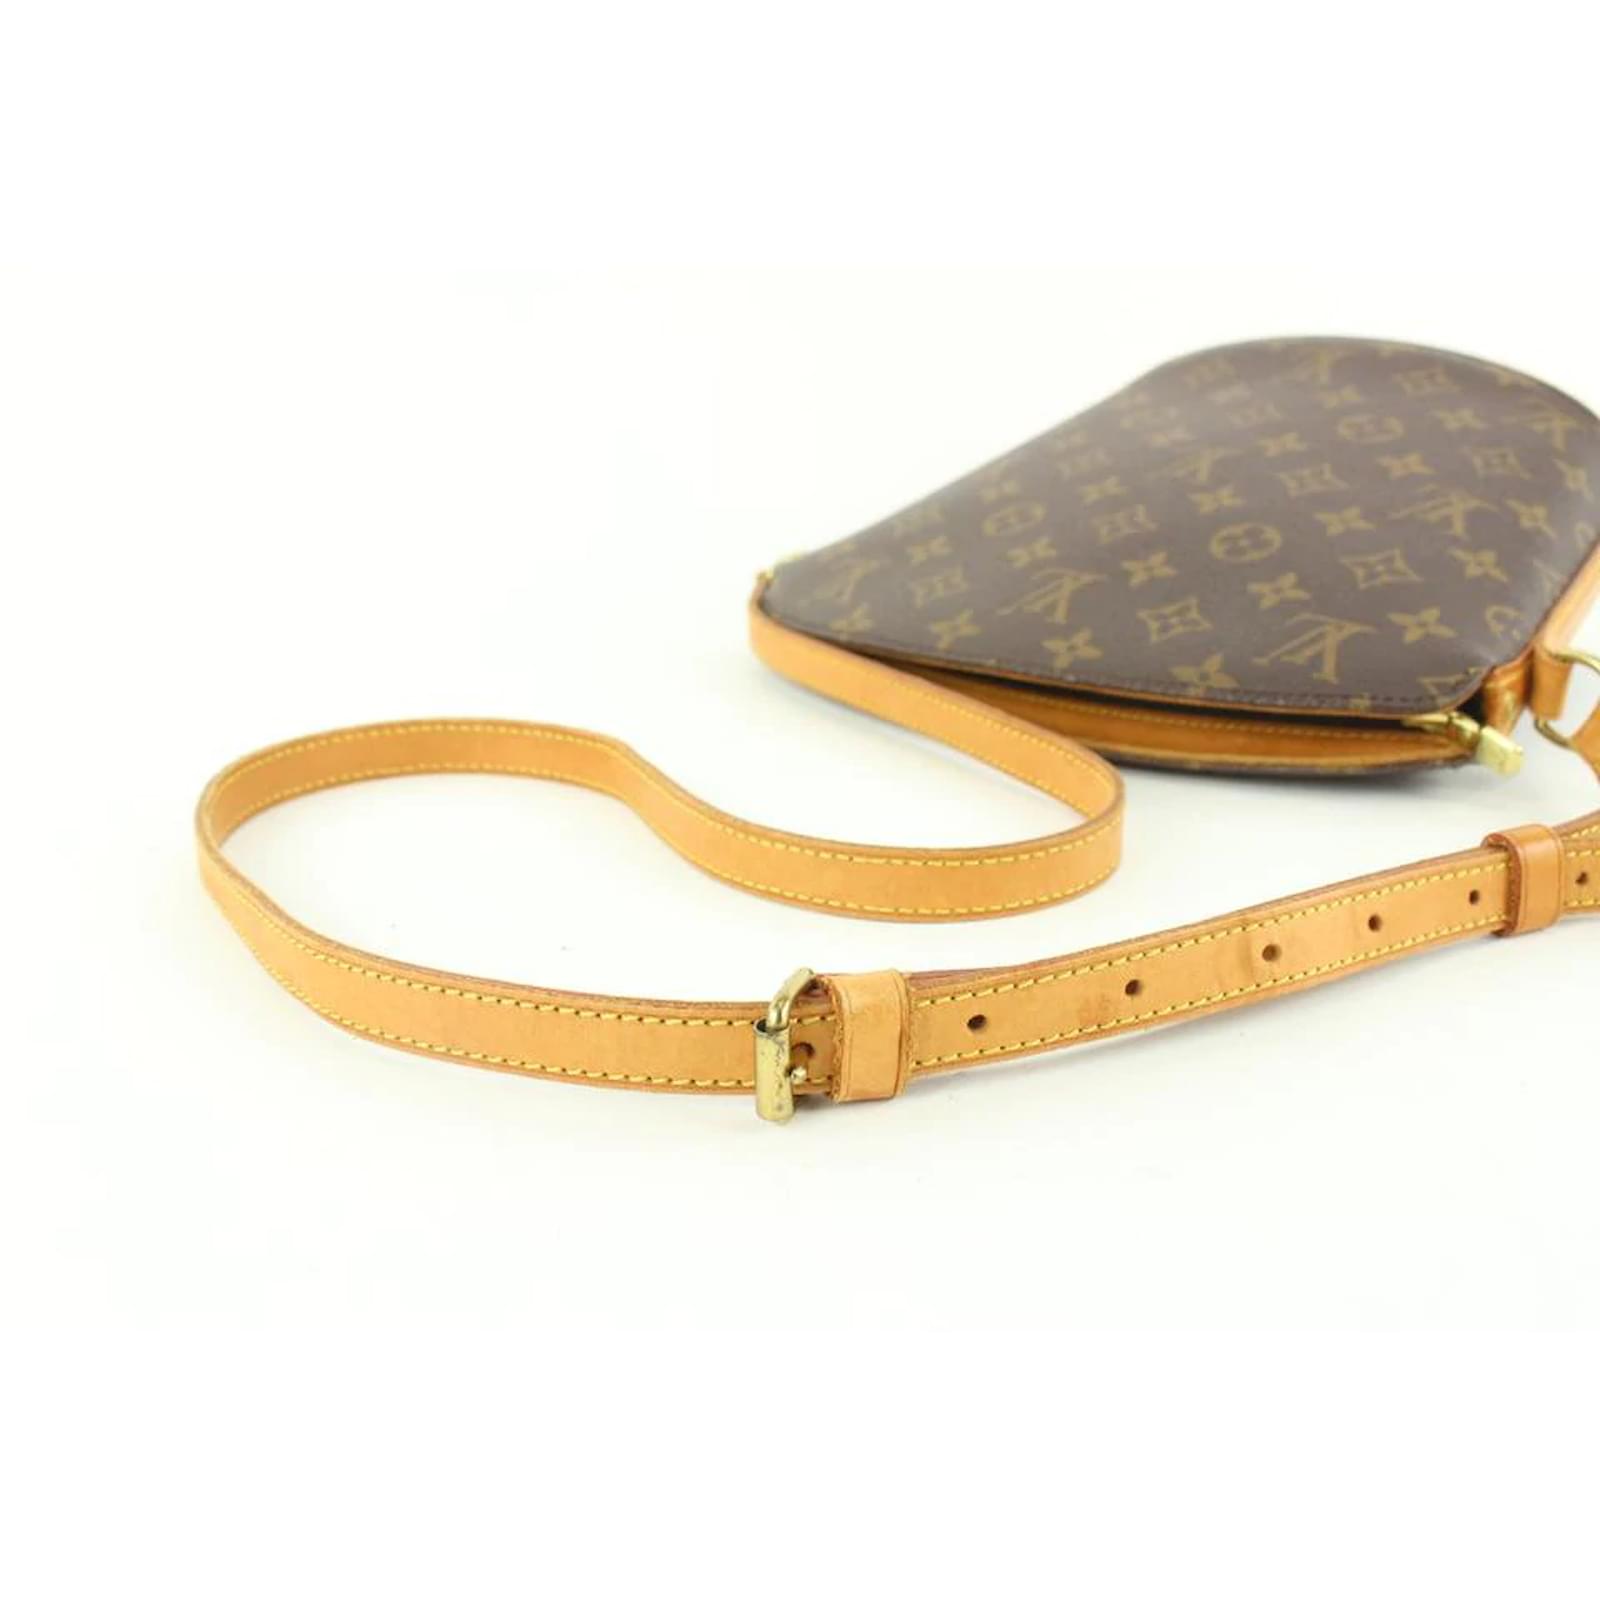 Princesspauonlineshoppe Main Page - ❗Authenticity Guaranteed❗ Louis Vuitton  Drouot Monogram Crossbody Bag! ❤️ 💌send DM for inquiries #lv #lvbag  #louisvuitton #baglover #bagcollection #bagcollector #luxury #luxurybag  #auth